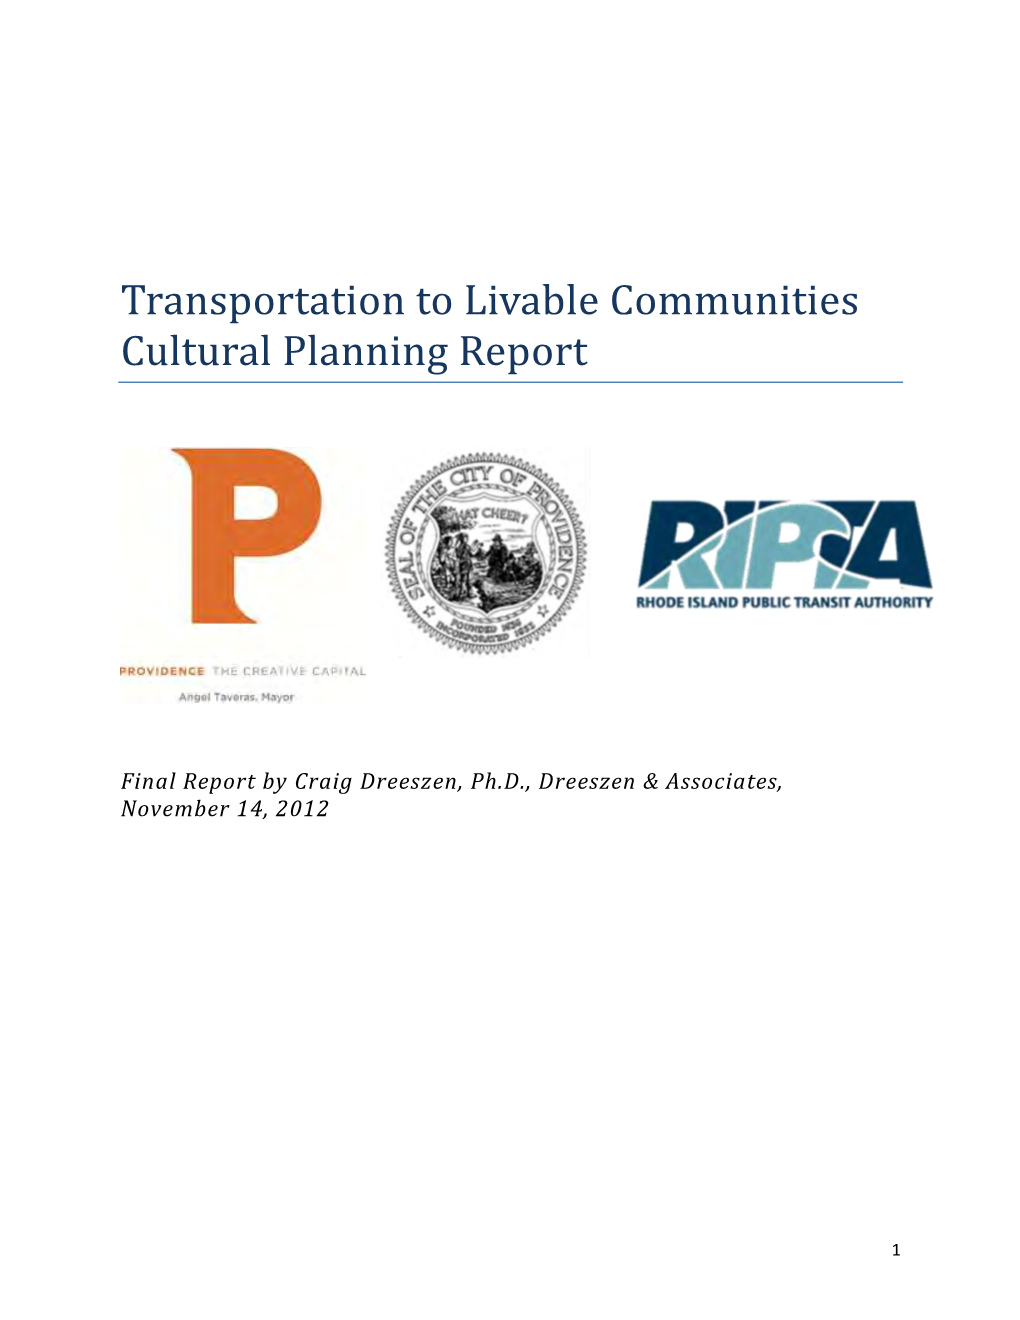 Cultural Planning Report